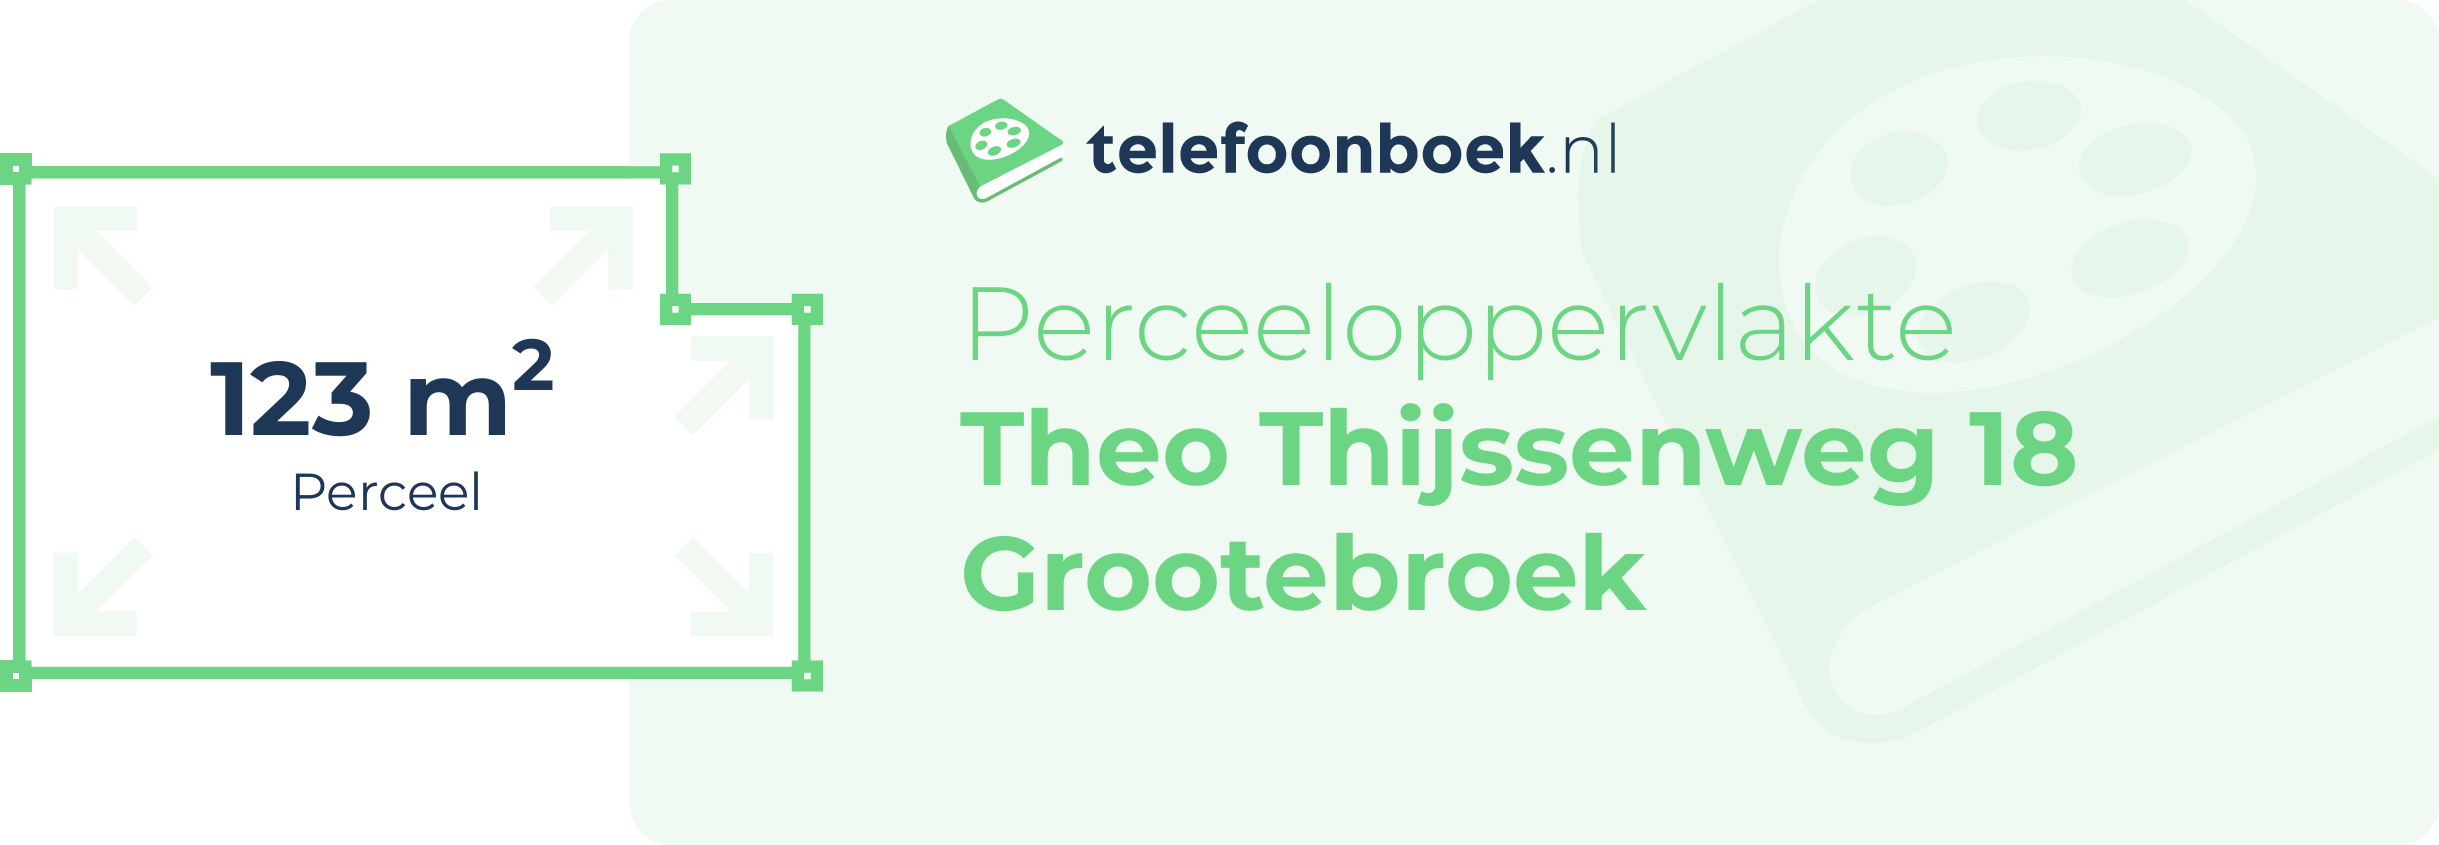 Perceeloppervlakte Theo Thijssenweg 18 Grootebroek